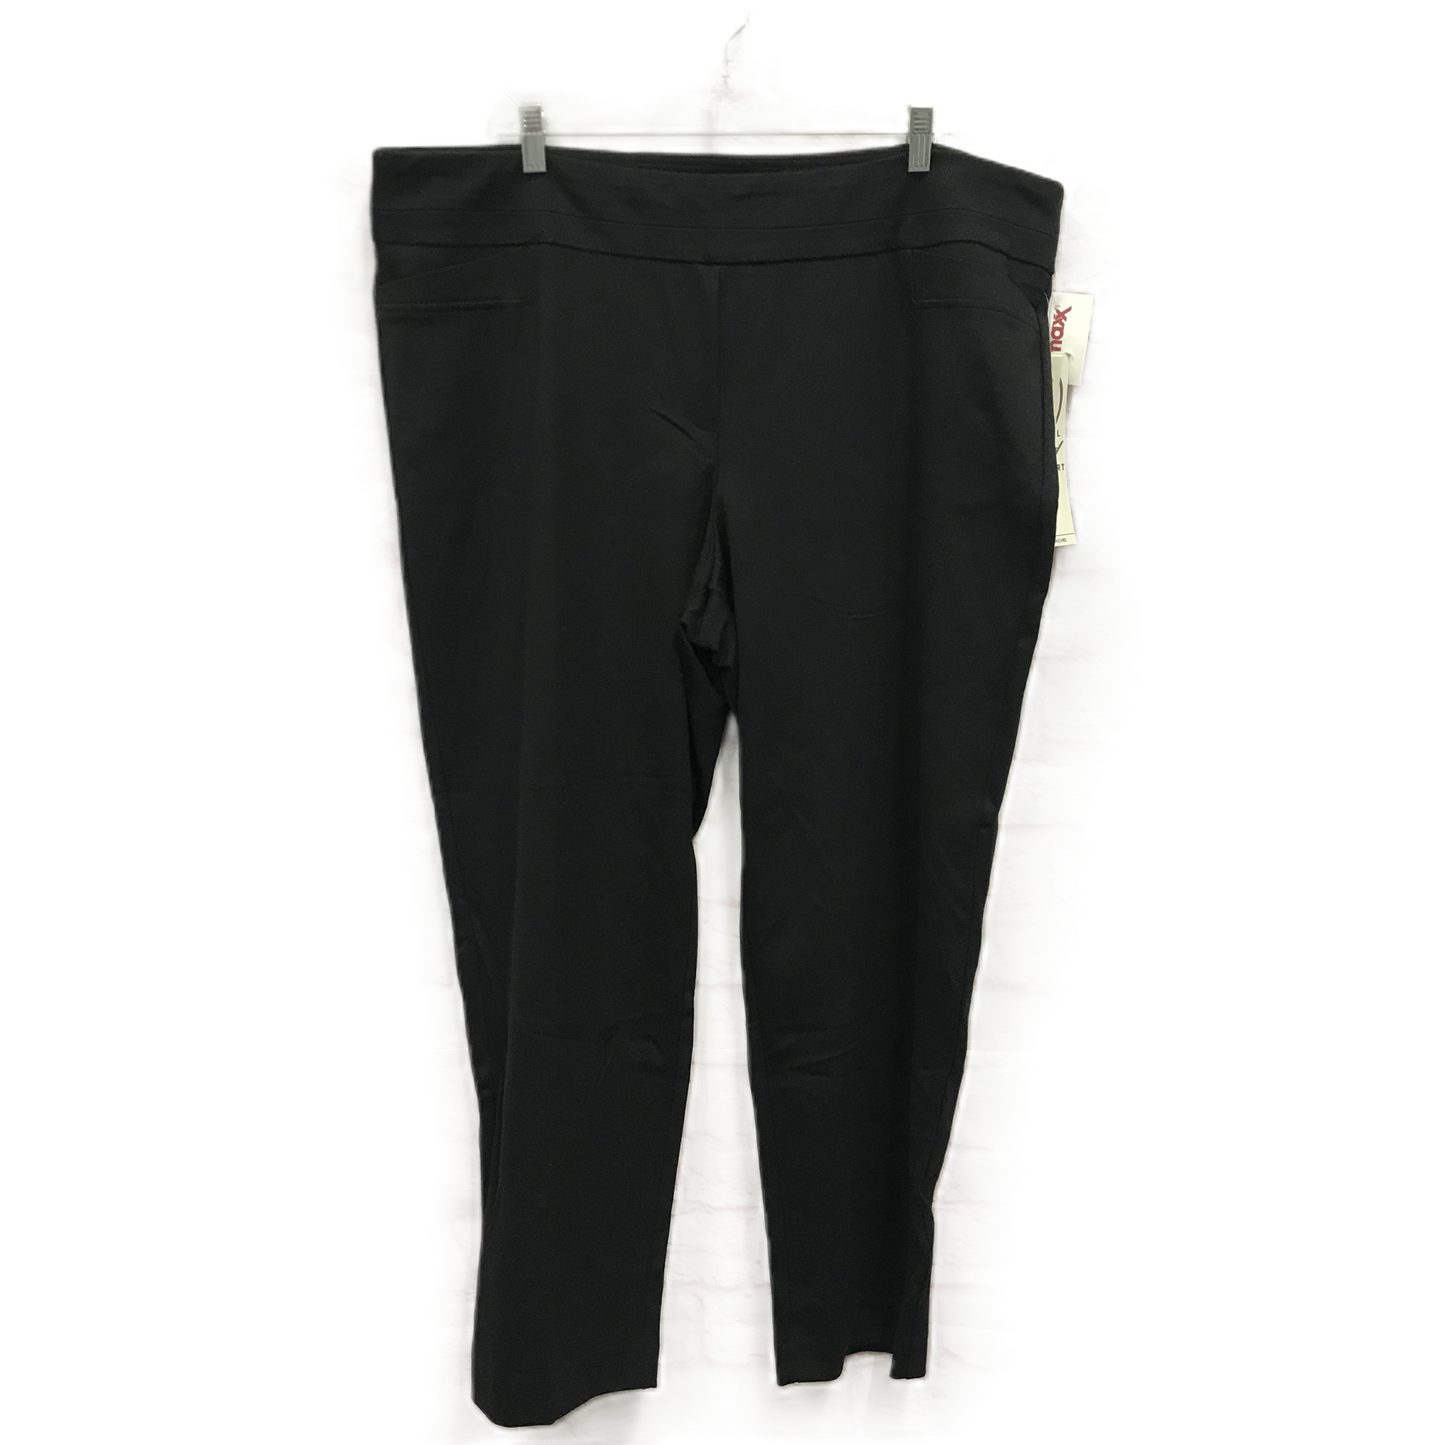 Black Pants Dress By Zac And Rachel, Size: 3x